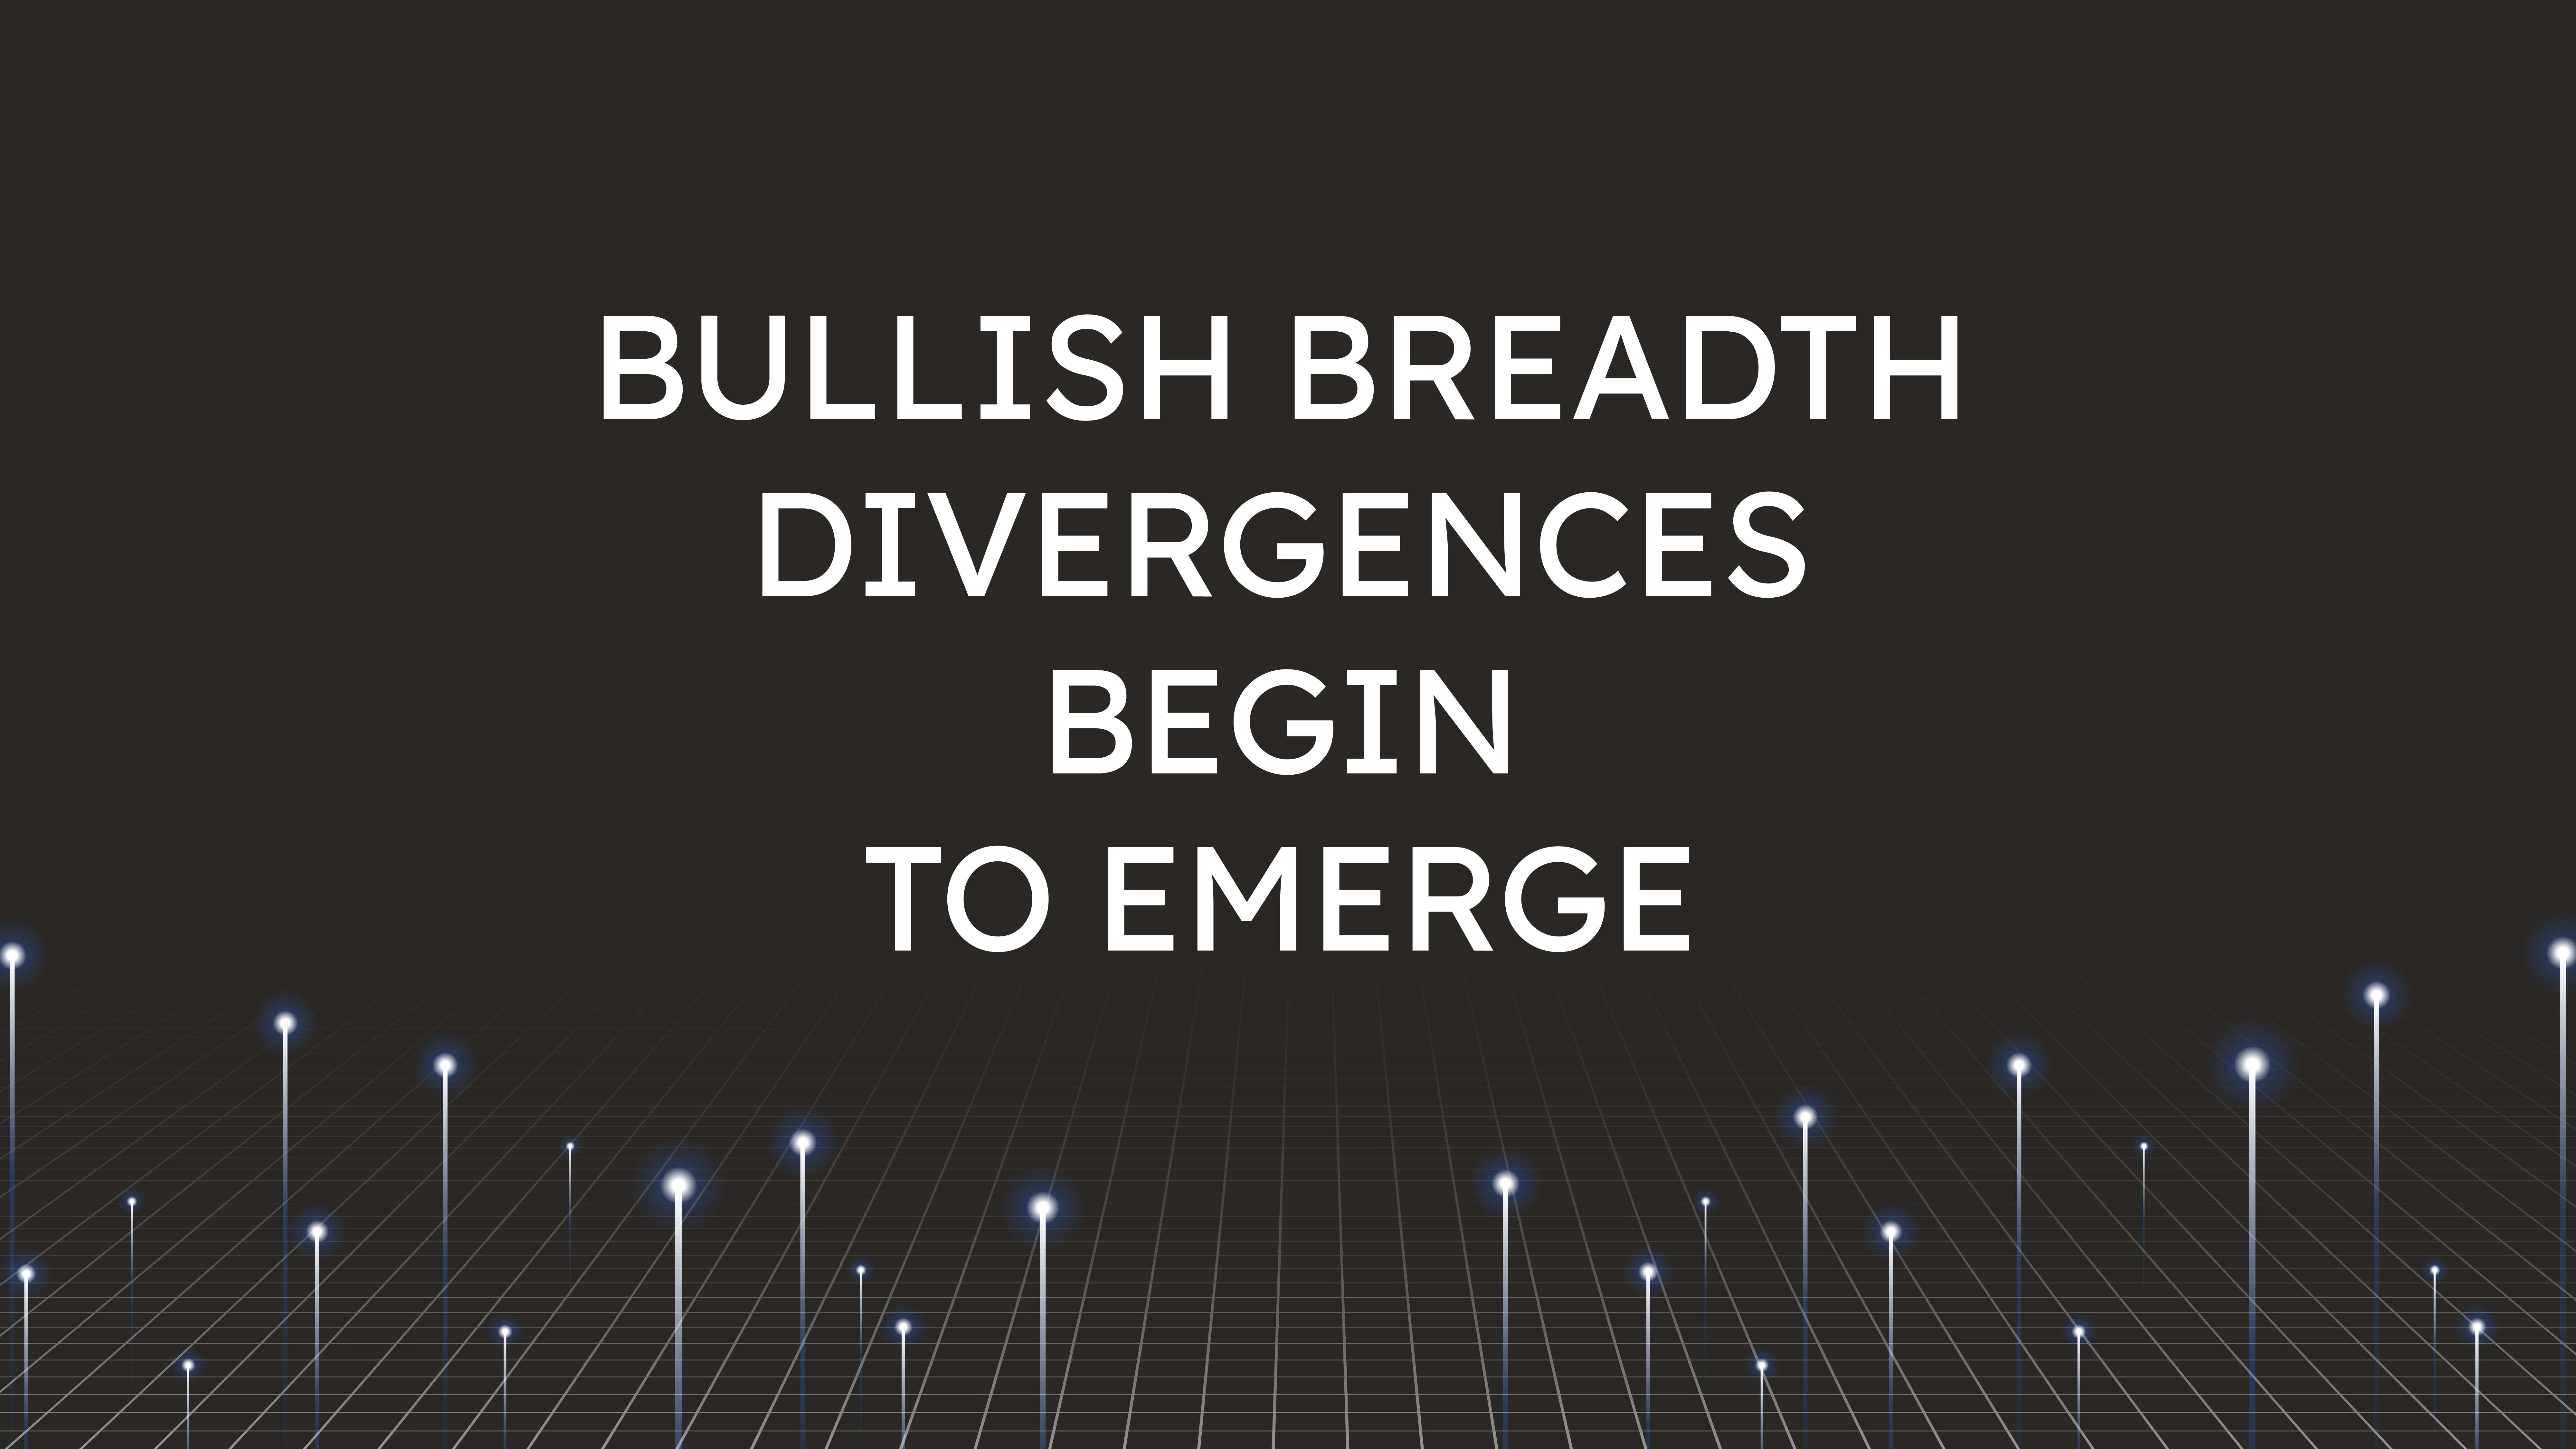 Bullish Breadth Divergences  Begin to Emerge